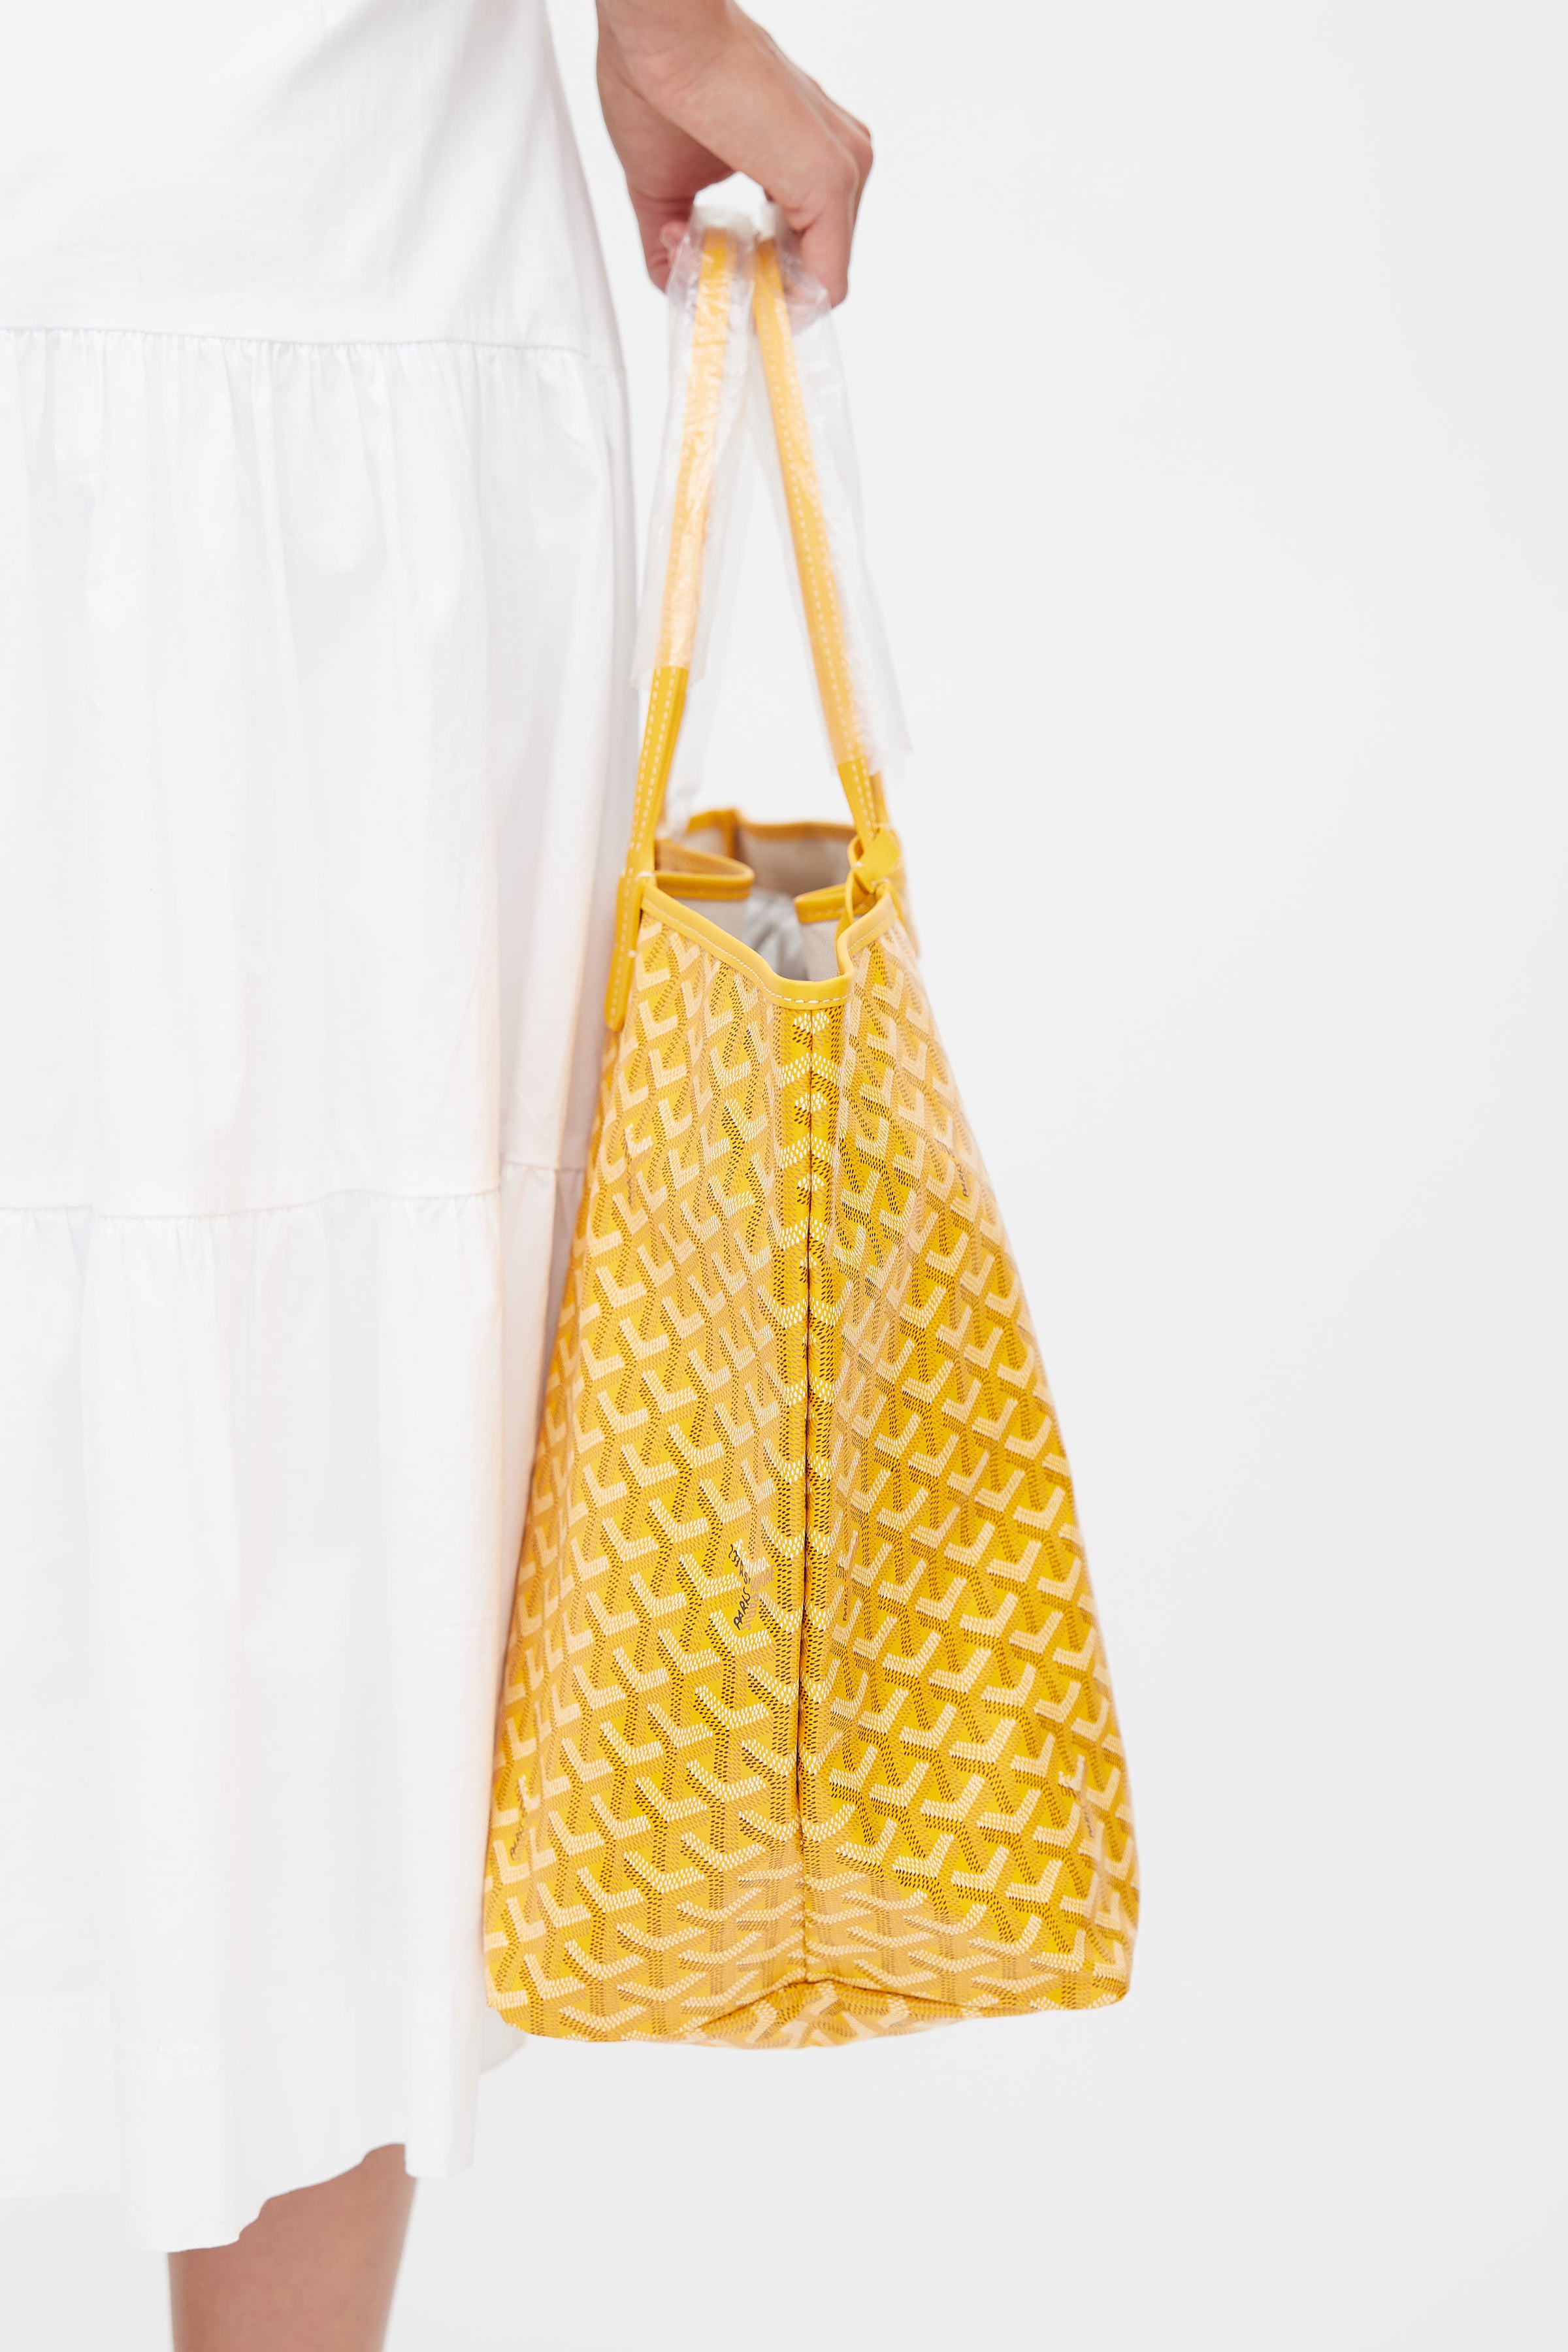 Goyard Yellow St. Louis GM Tote Bag, Designer Brand